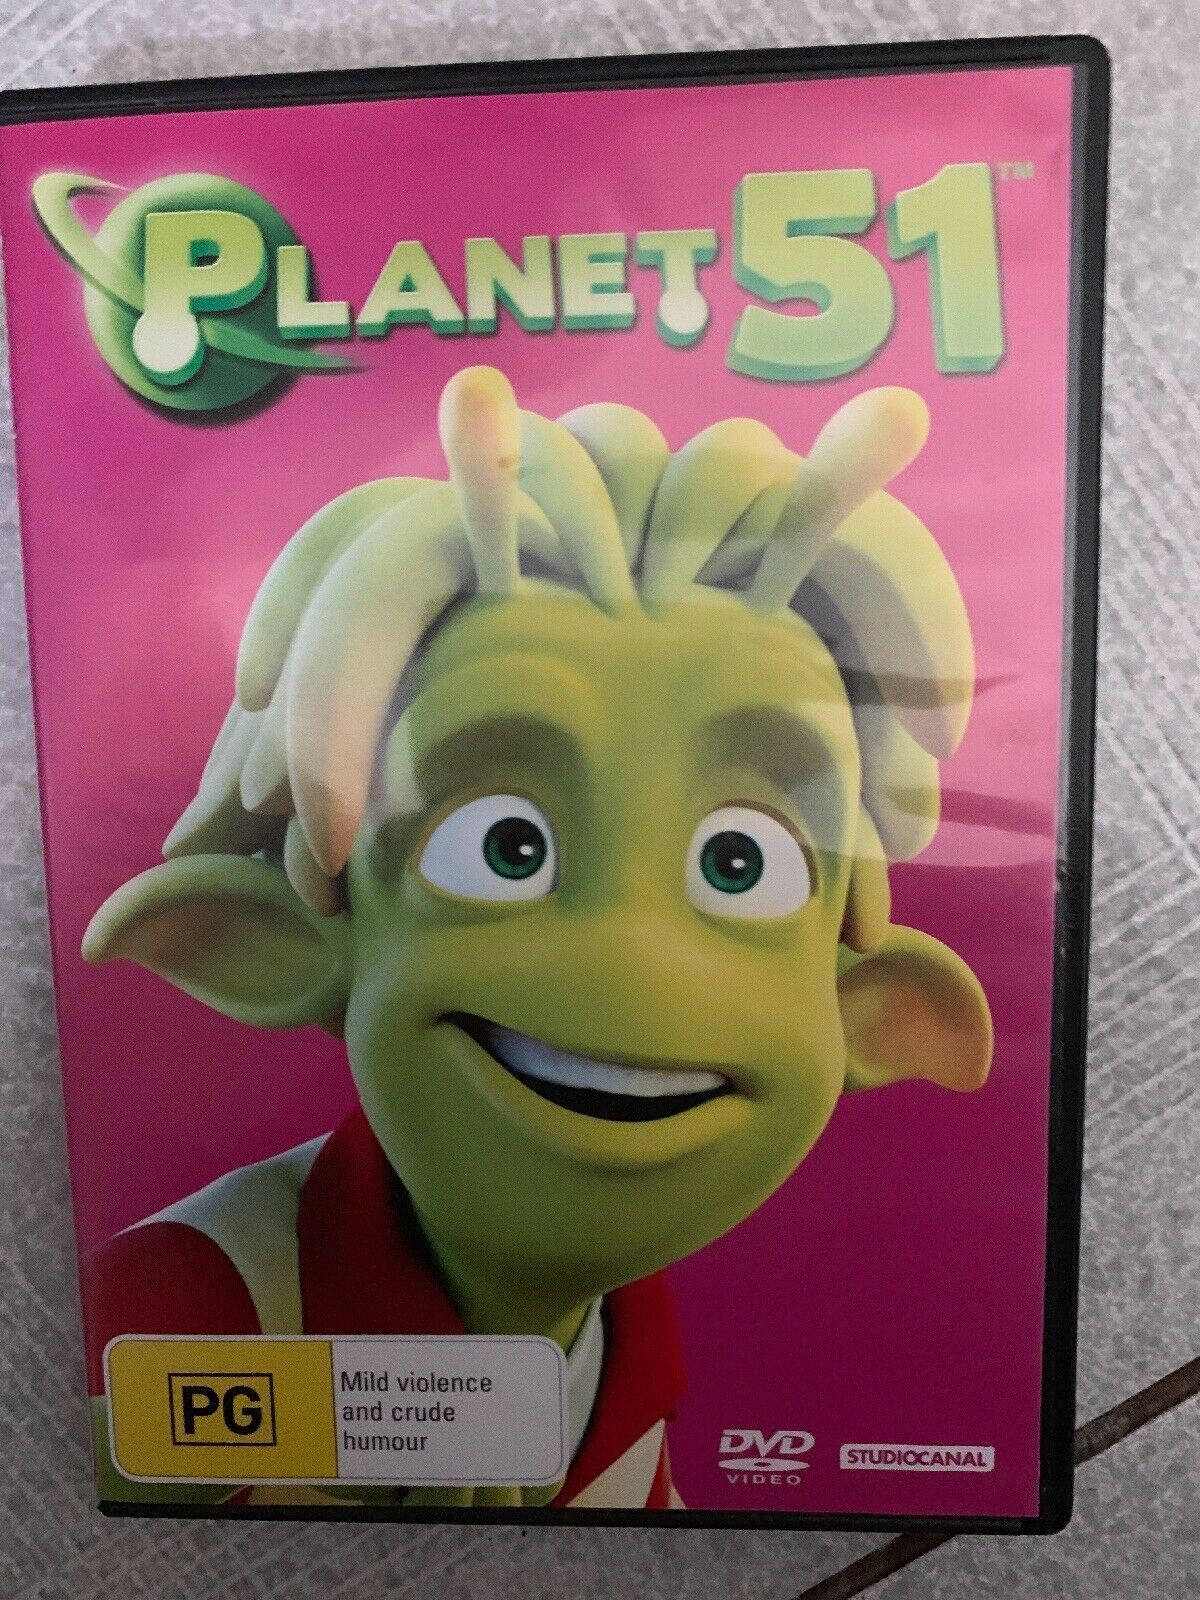 Planet 51 (DVD, 2014) - "The Rock" Dwayne Johnson, Jessica Biel, Gary Oldman